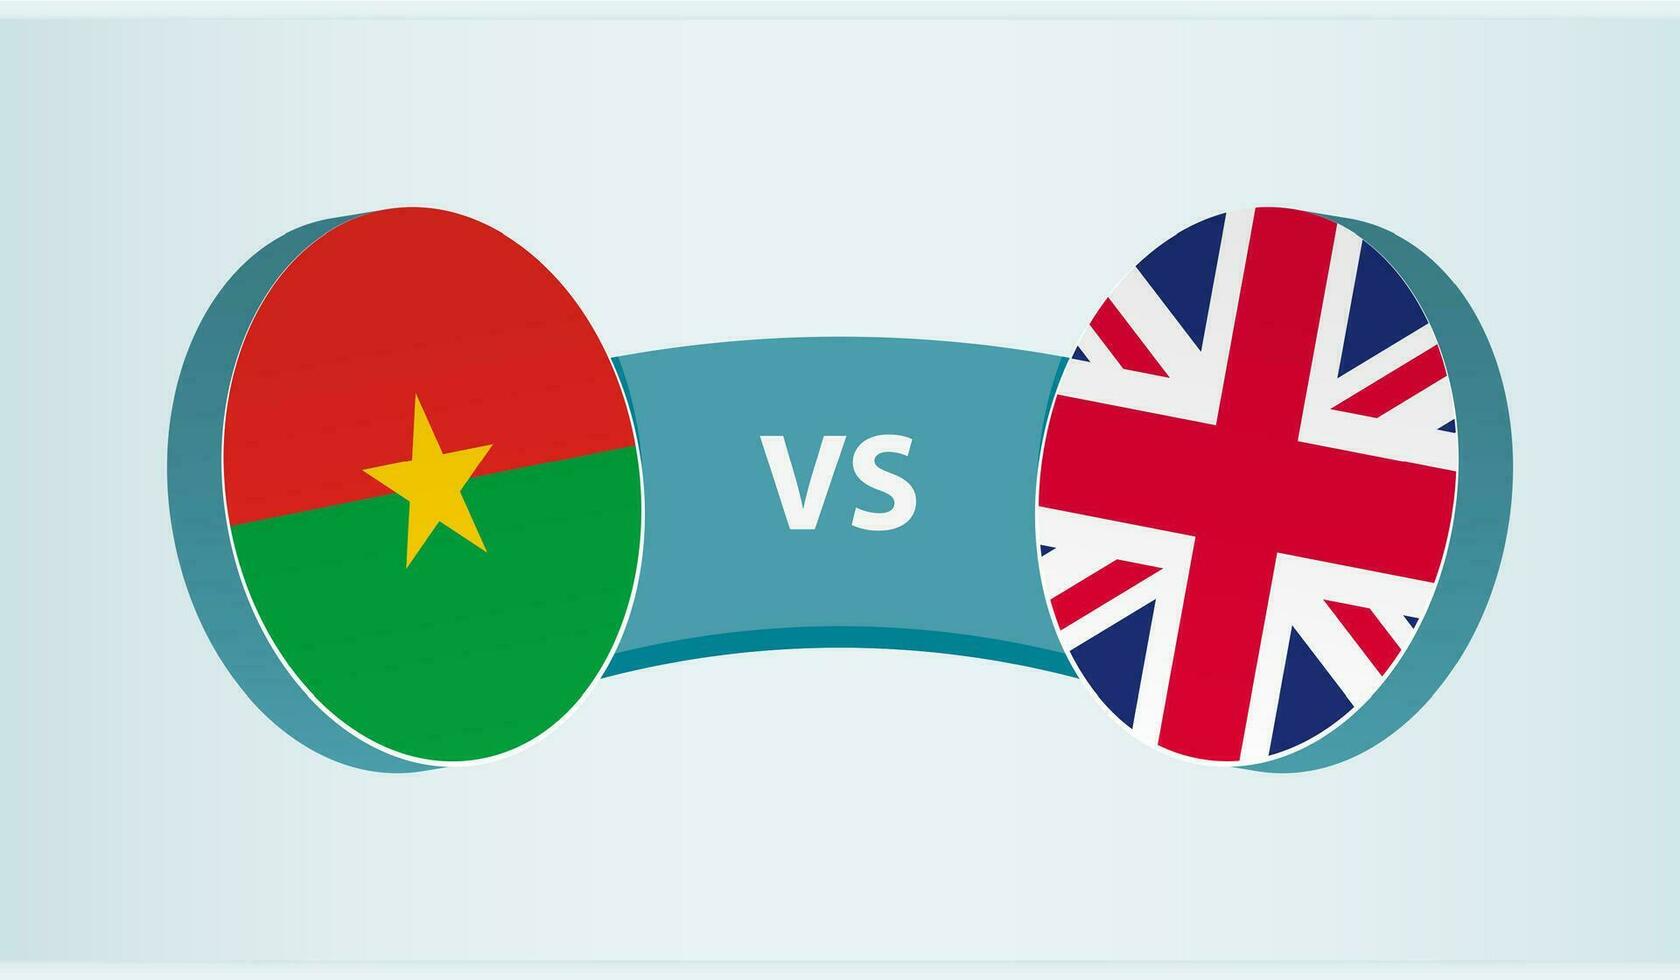 Burkina Faso versus United Kingdom, team sports competition concept. vector